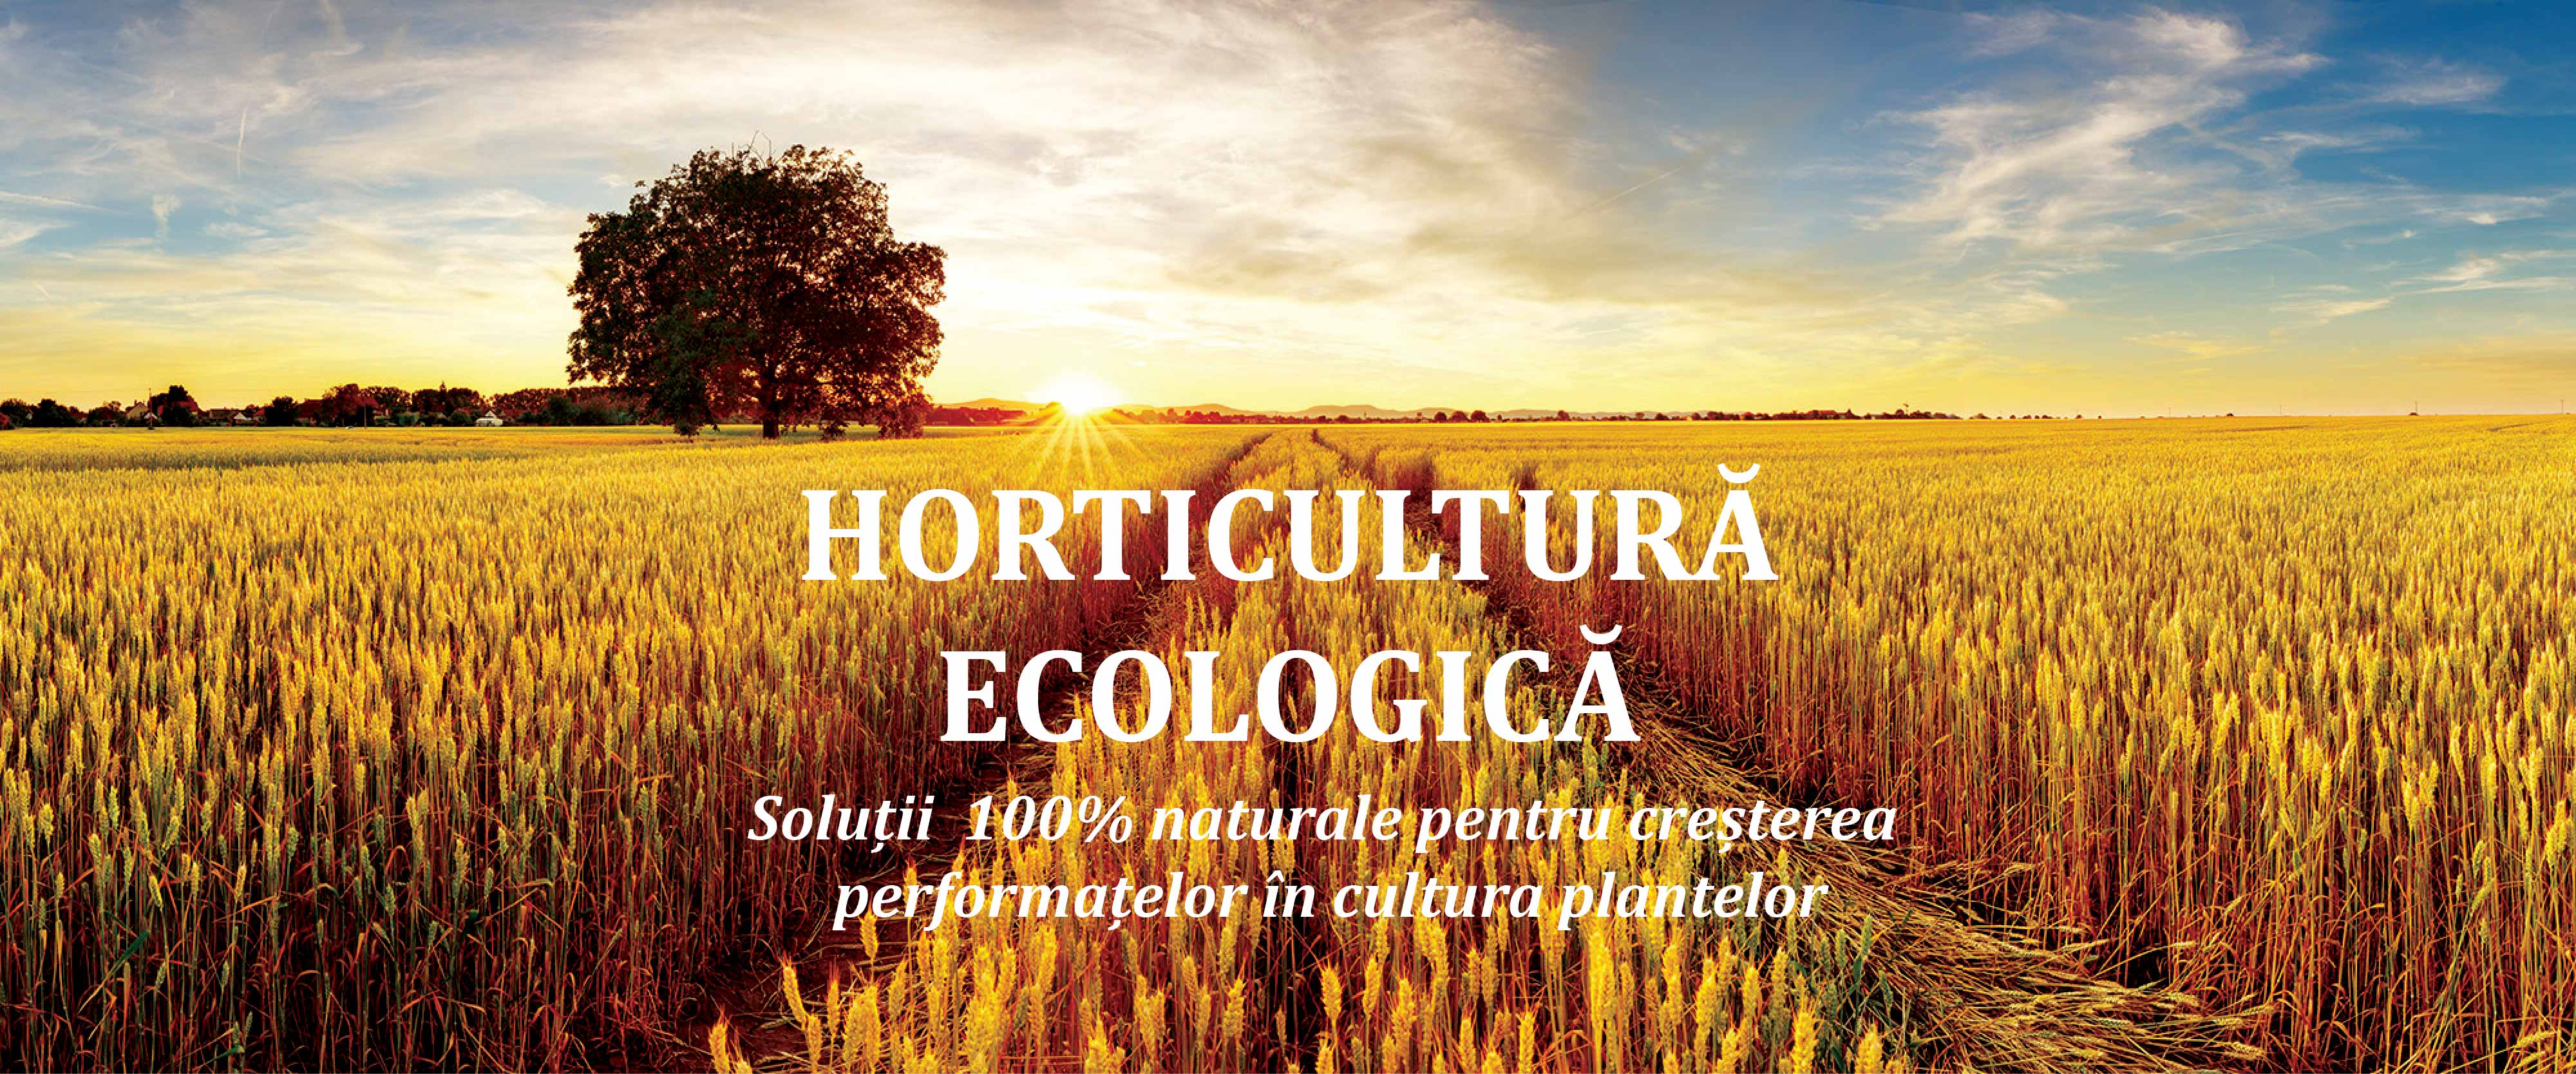 Horticultura ecologica